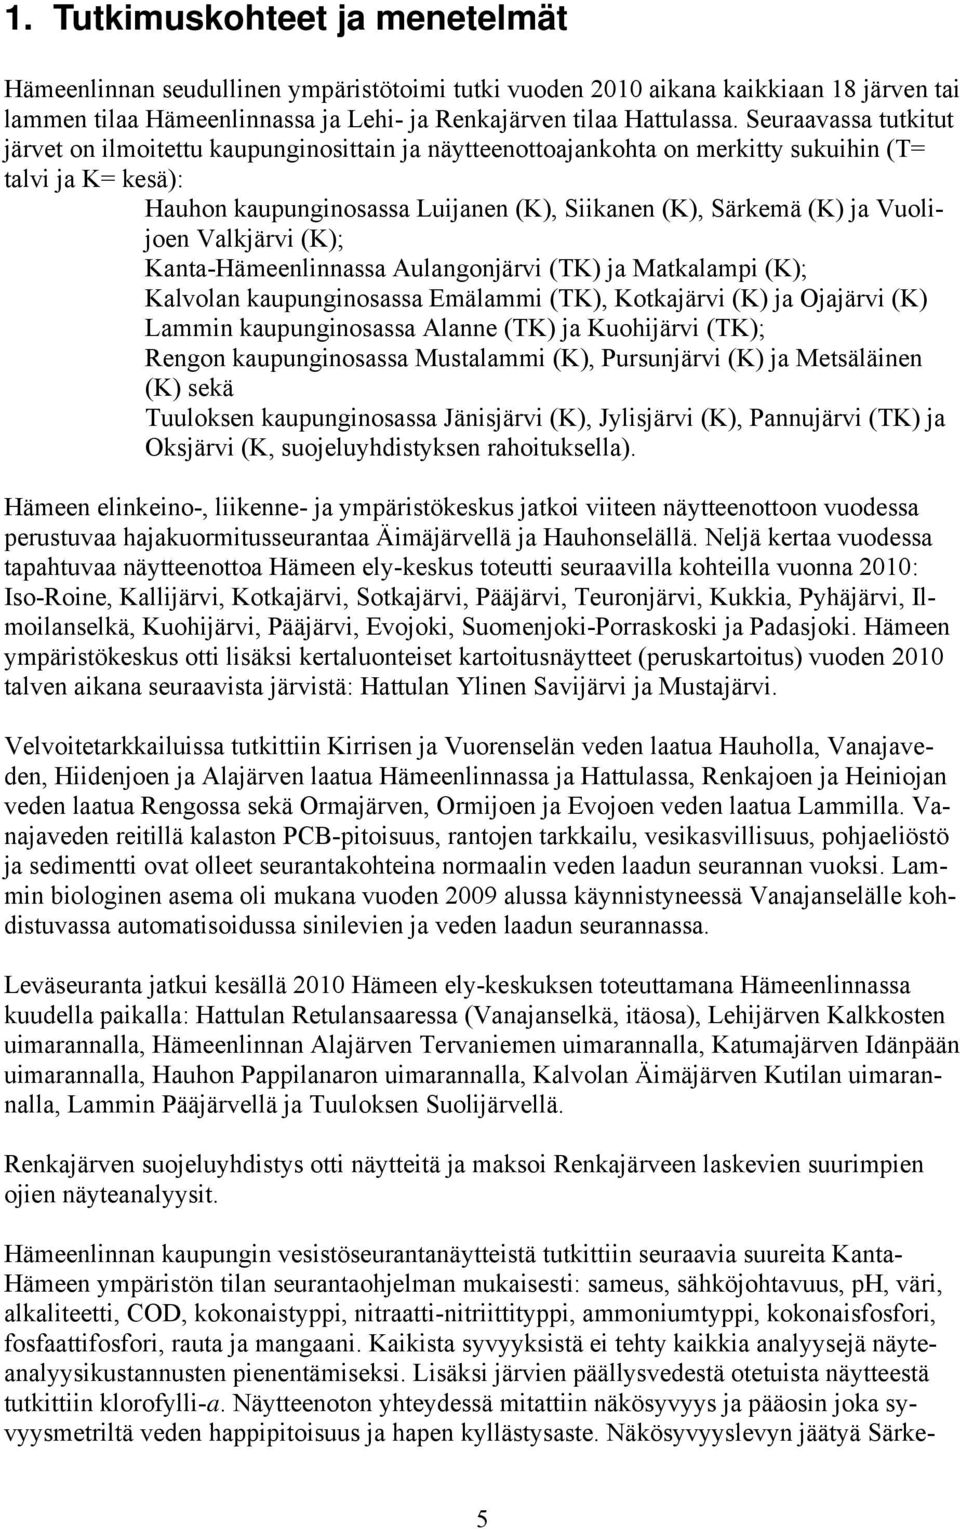 Vuolijoen Valkjärvi (K); Kanta-Hämeenlinnassa Aulangonjärvi (TK) ja Matkalampi (K); Kalvolan kaupunginosassa Emälammi (TK), Kotkajärvi (K) ja Ojajärvi (K) Lammin kaupunginosassa Alanne (TK) ja